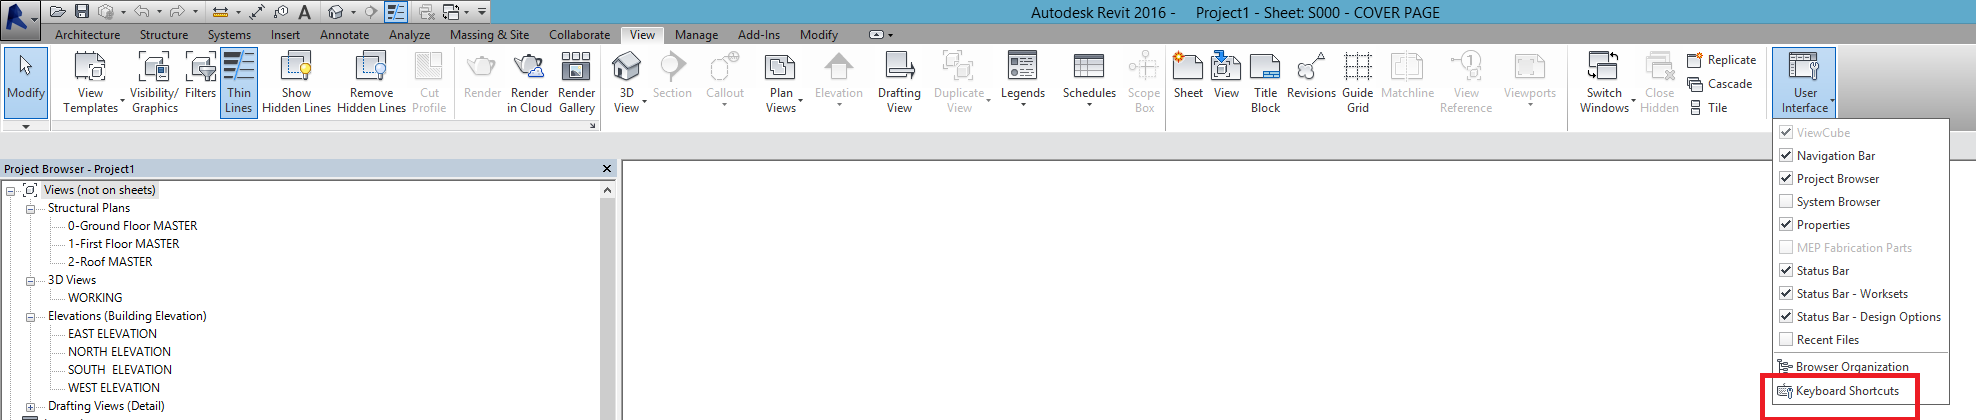 Revit Keyboard Shortcuts - KeyboardShotcuts_View tab